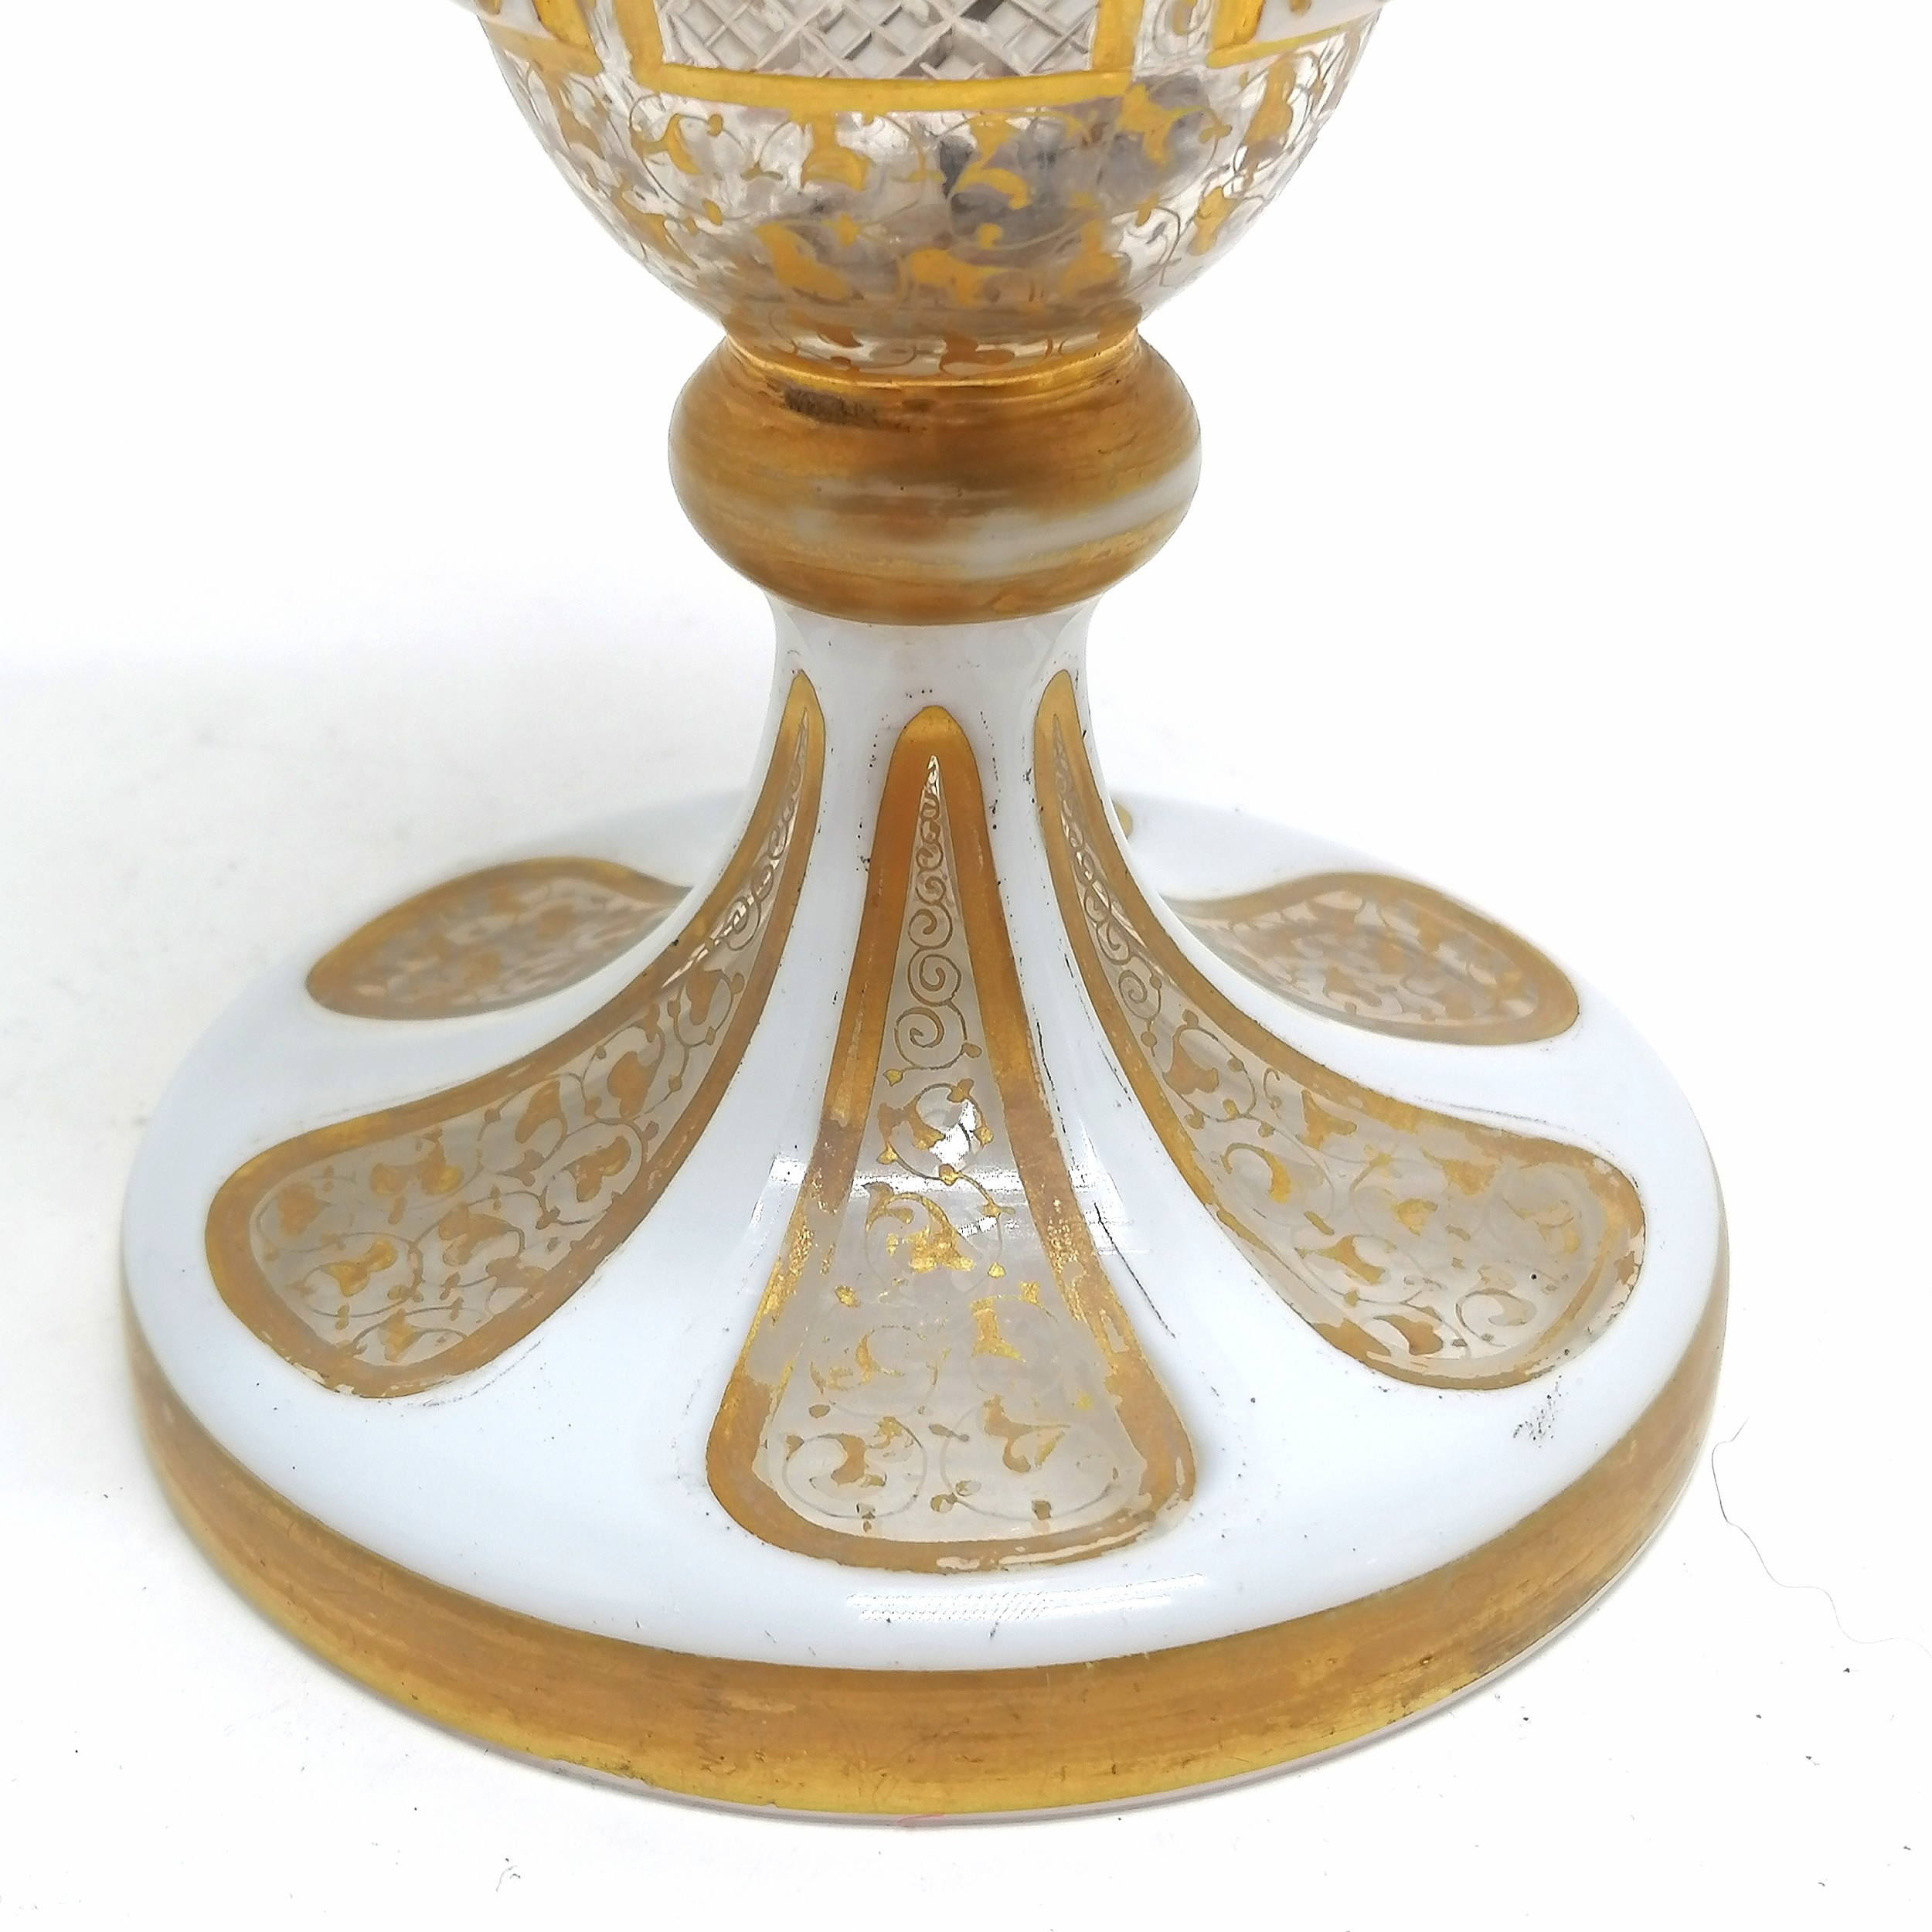 Antique Bohemian overlaid glass vase with profuse gilt decoration & decorative panels - 36cm - Image 4 of 5